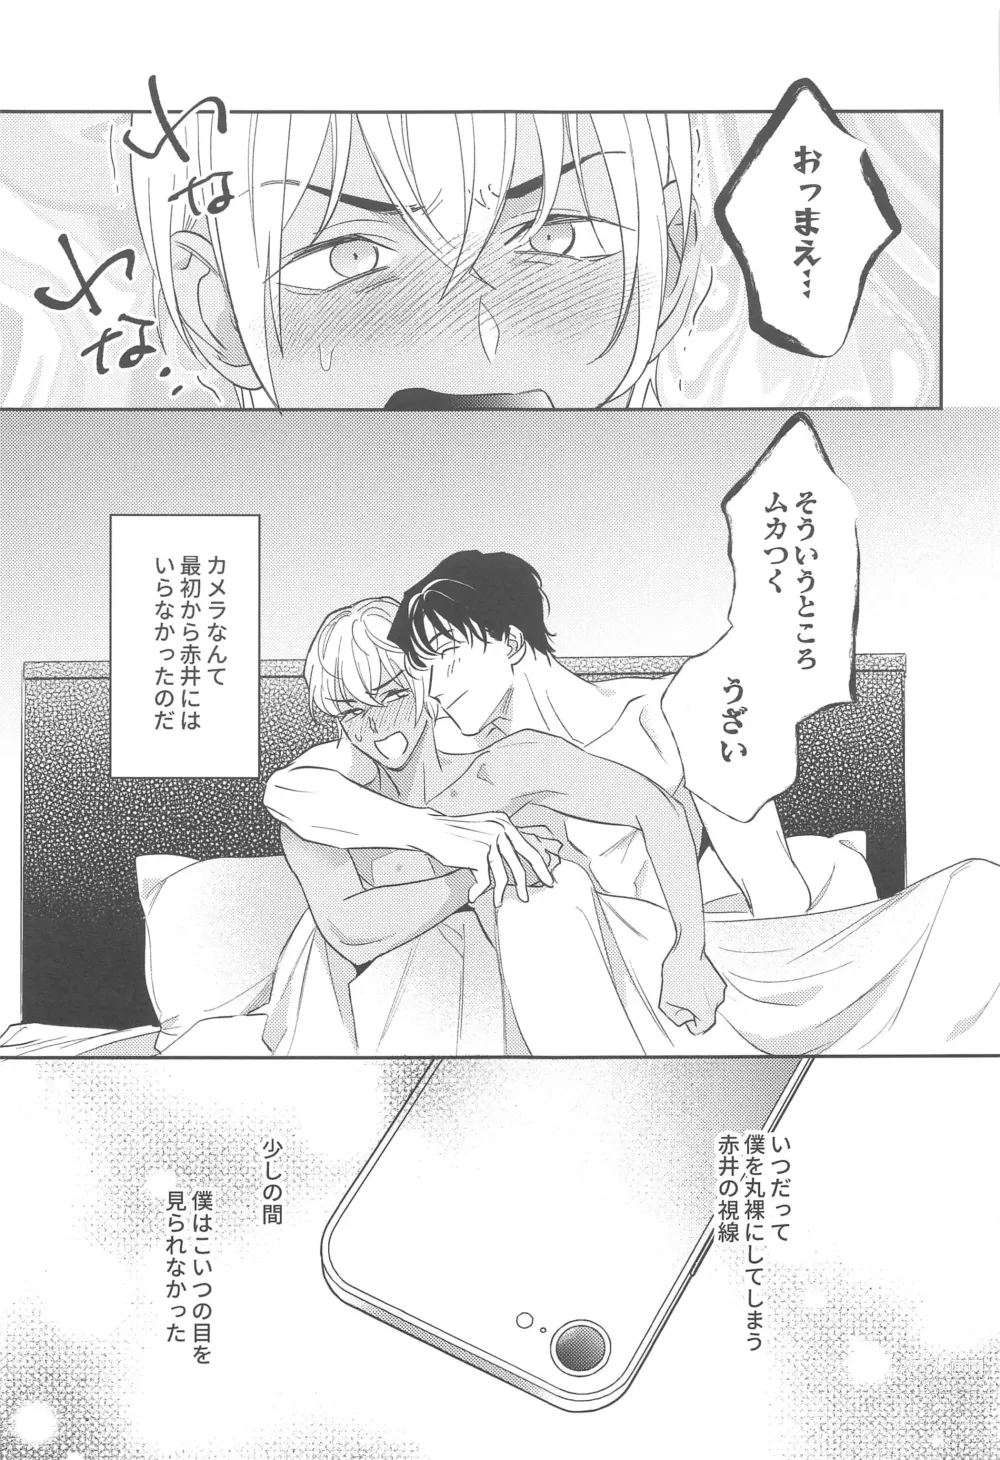 Page 36 of doujinshi REC